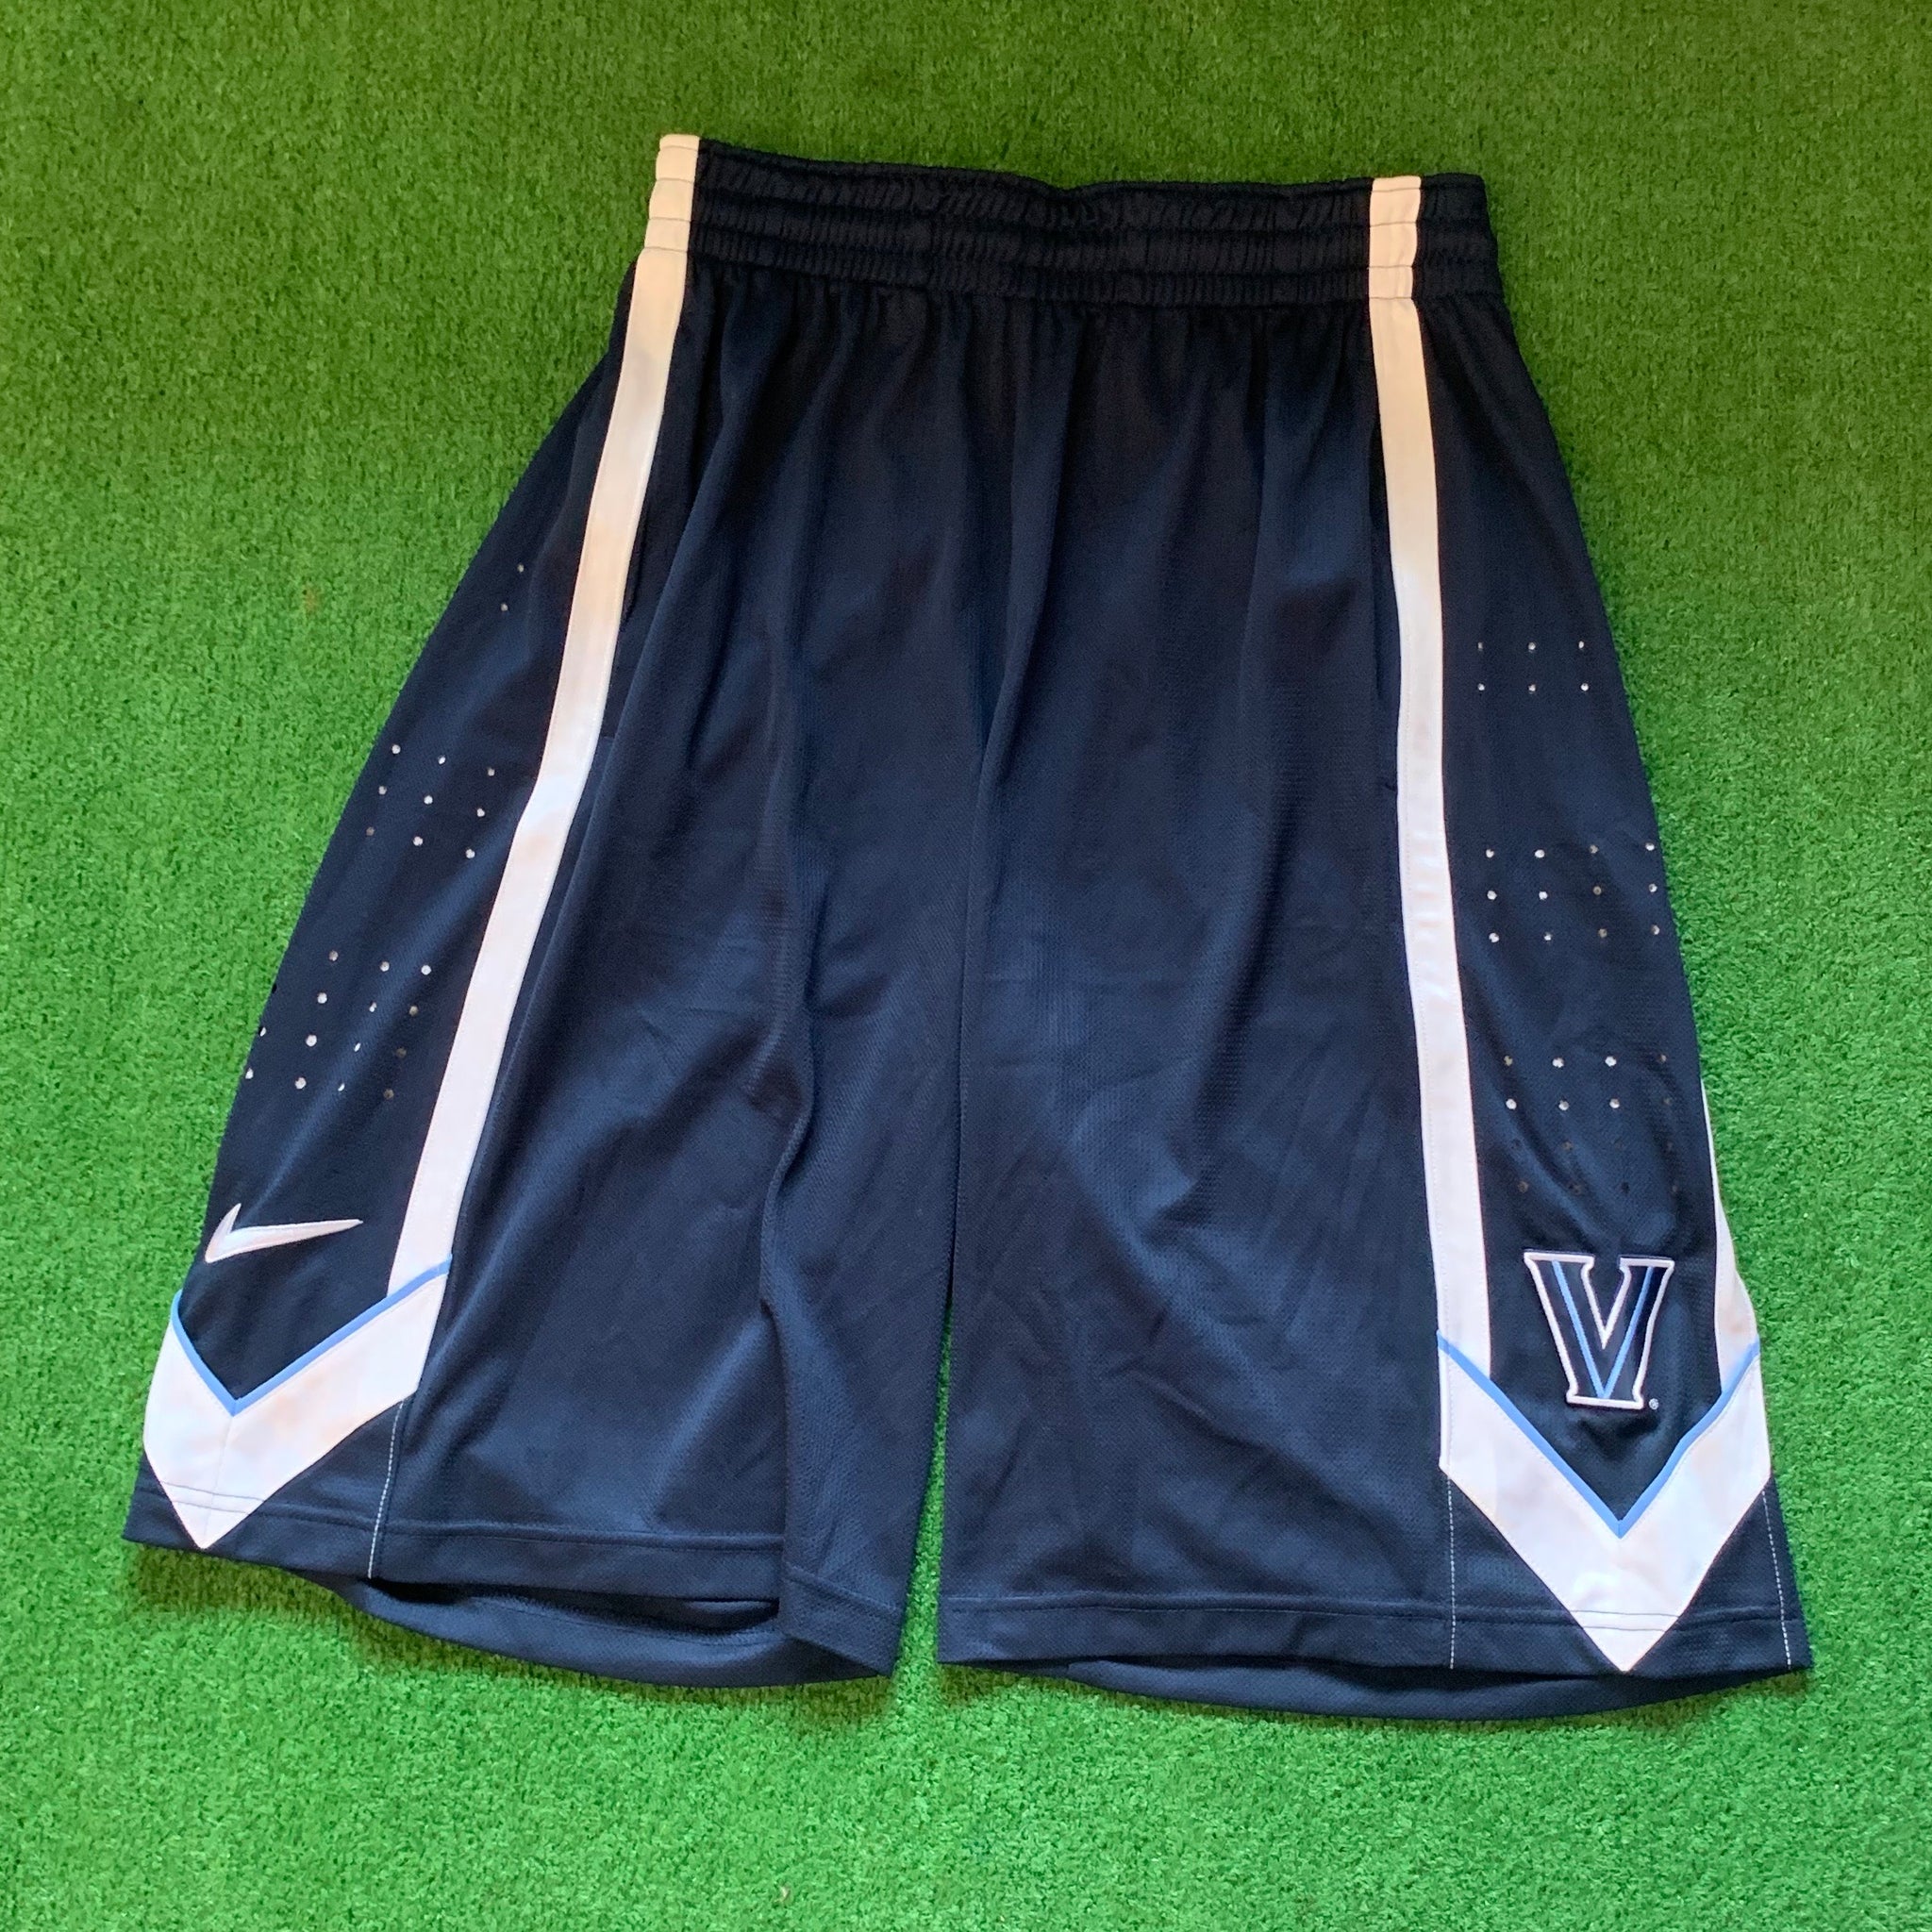 villanova basketball shorts